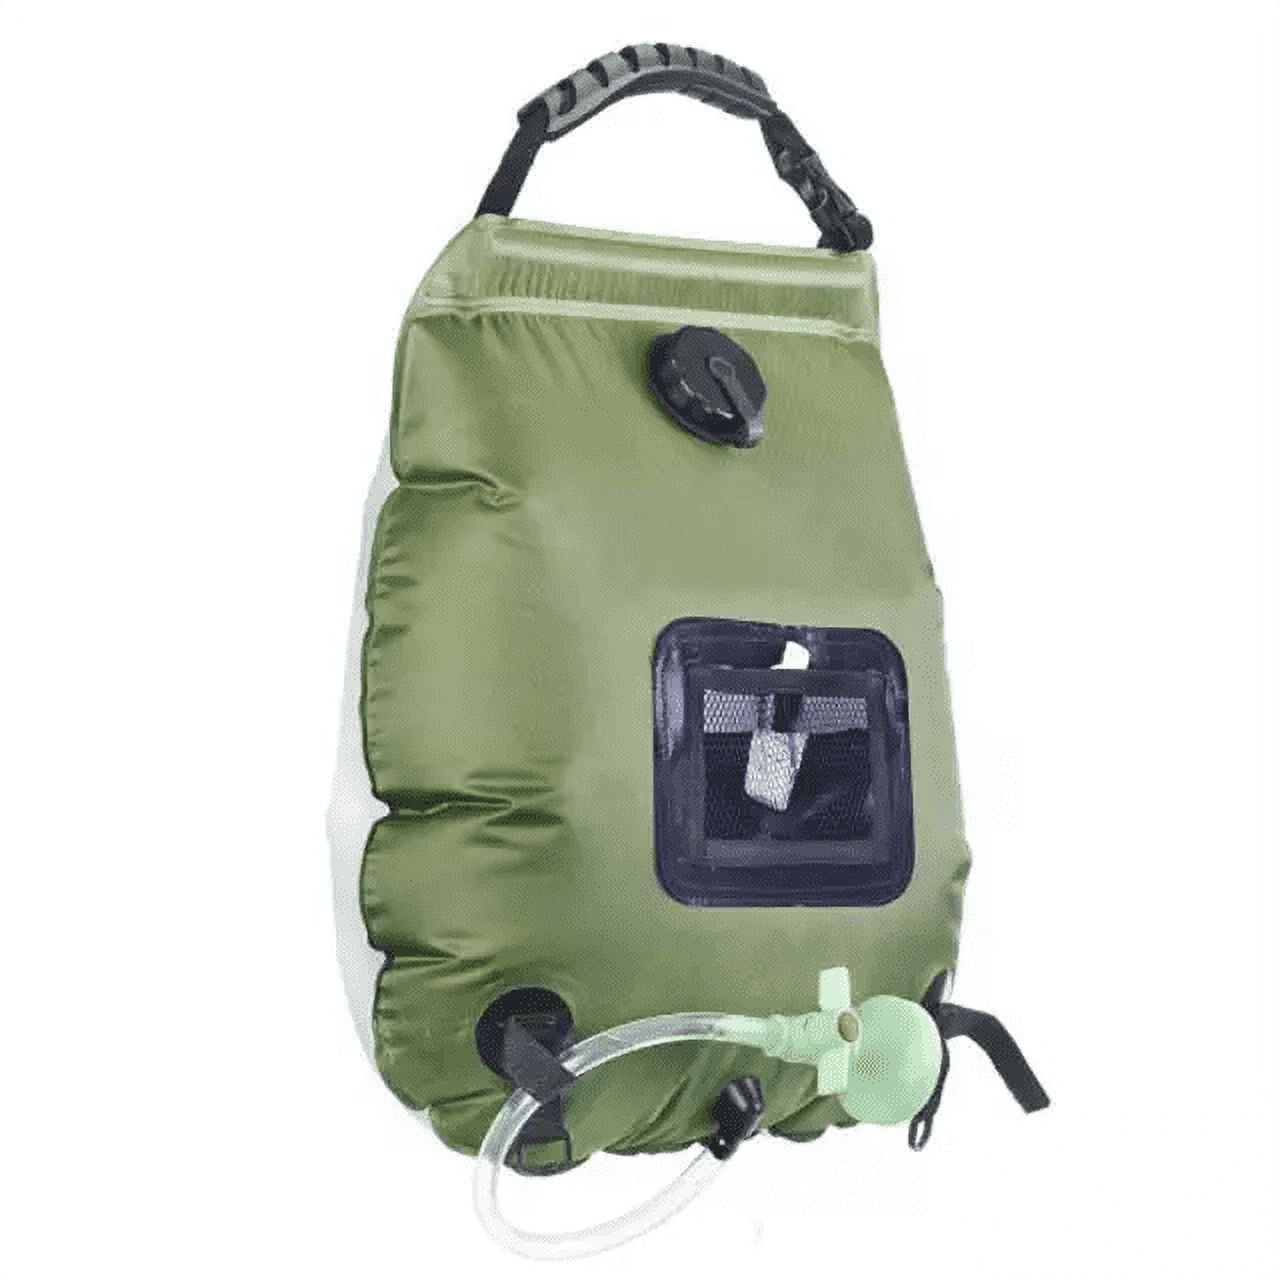 RadBizz Portable Outdoor Camping Shower - 5 Gallon/20 Liter Camp